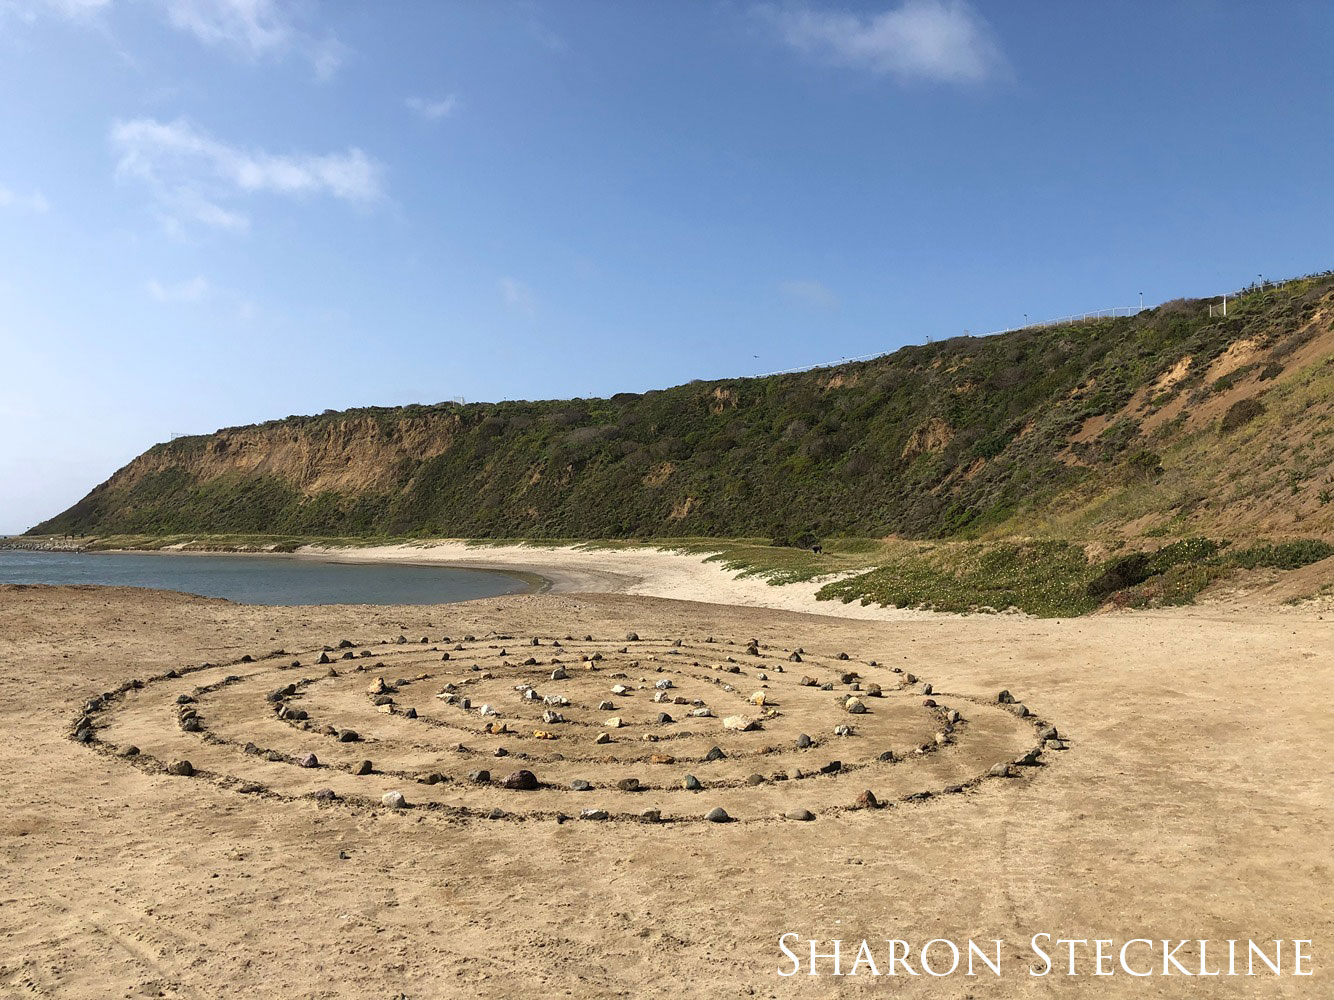 Circles of rocks on a beach.